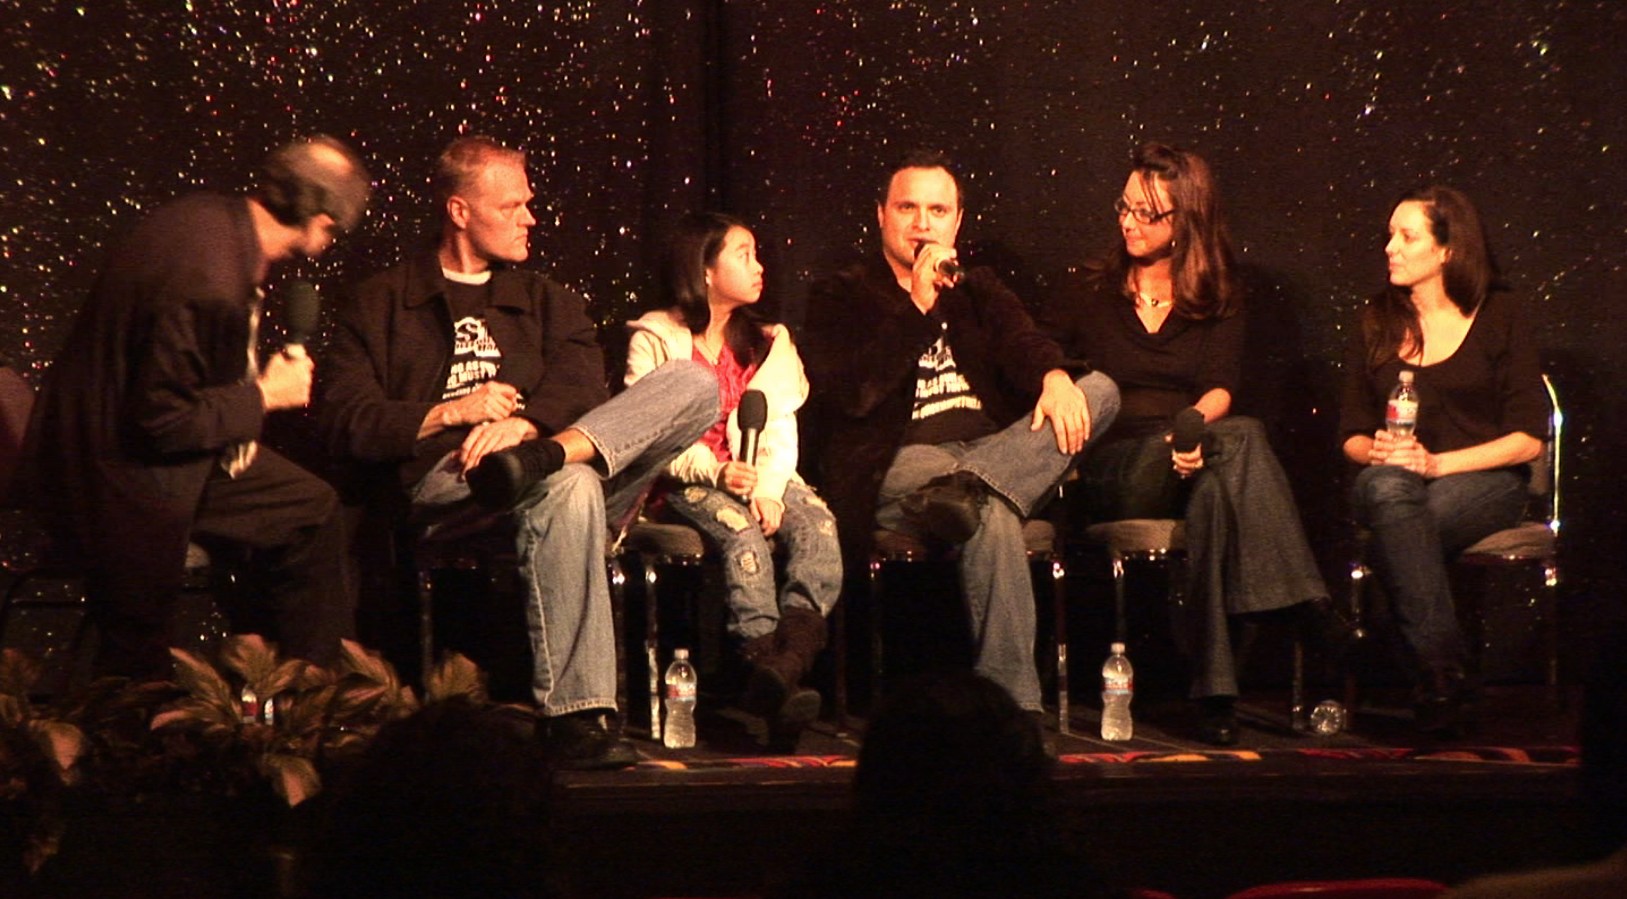 Bob Nuchow, Aaron Huisenfeldt, Melody Au, Joe Saldana, Tiffany McClintock and Andrea Jackson at the Beverly Hills Hi Def Film Festival, December 2007.